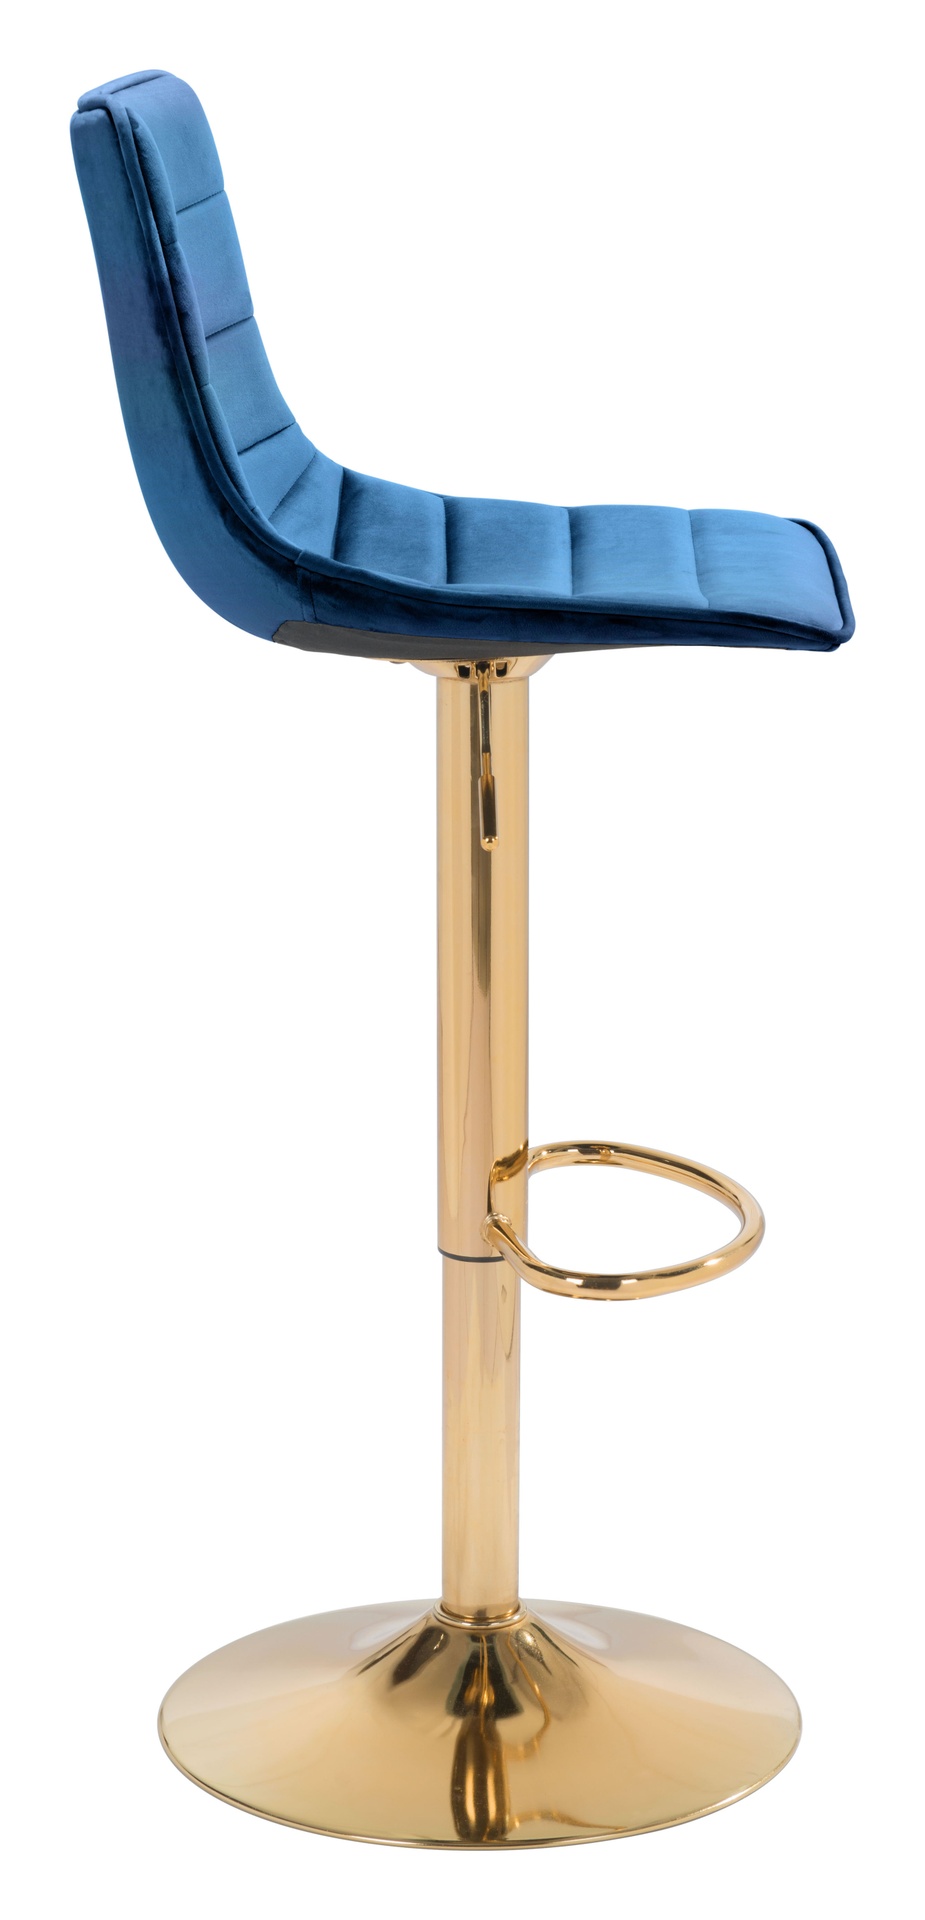 Amir silla bar azul oscuro y dorado // MS